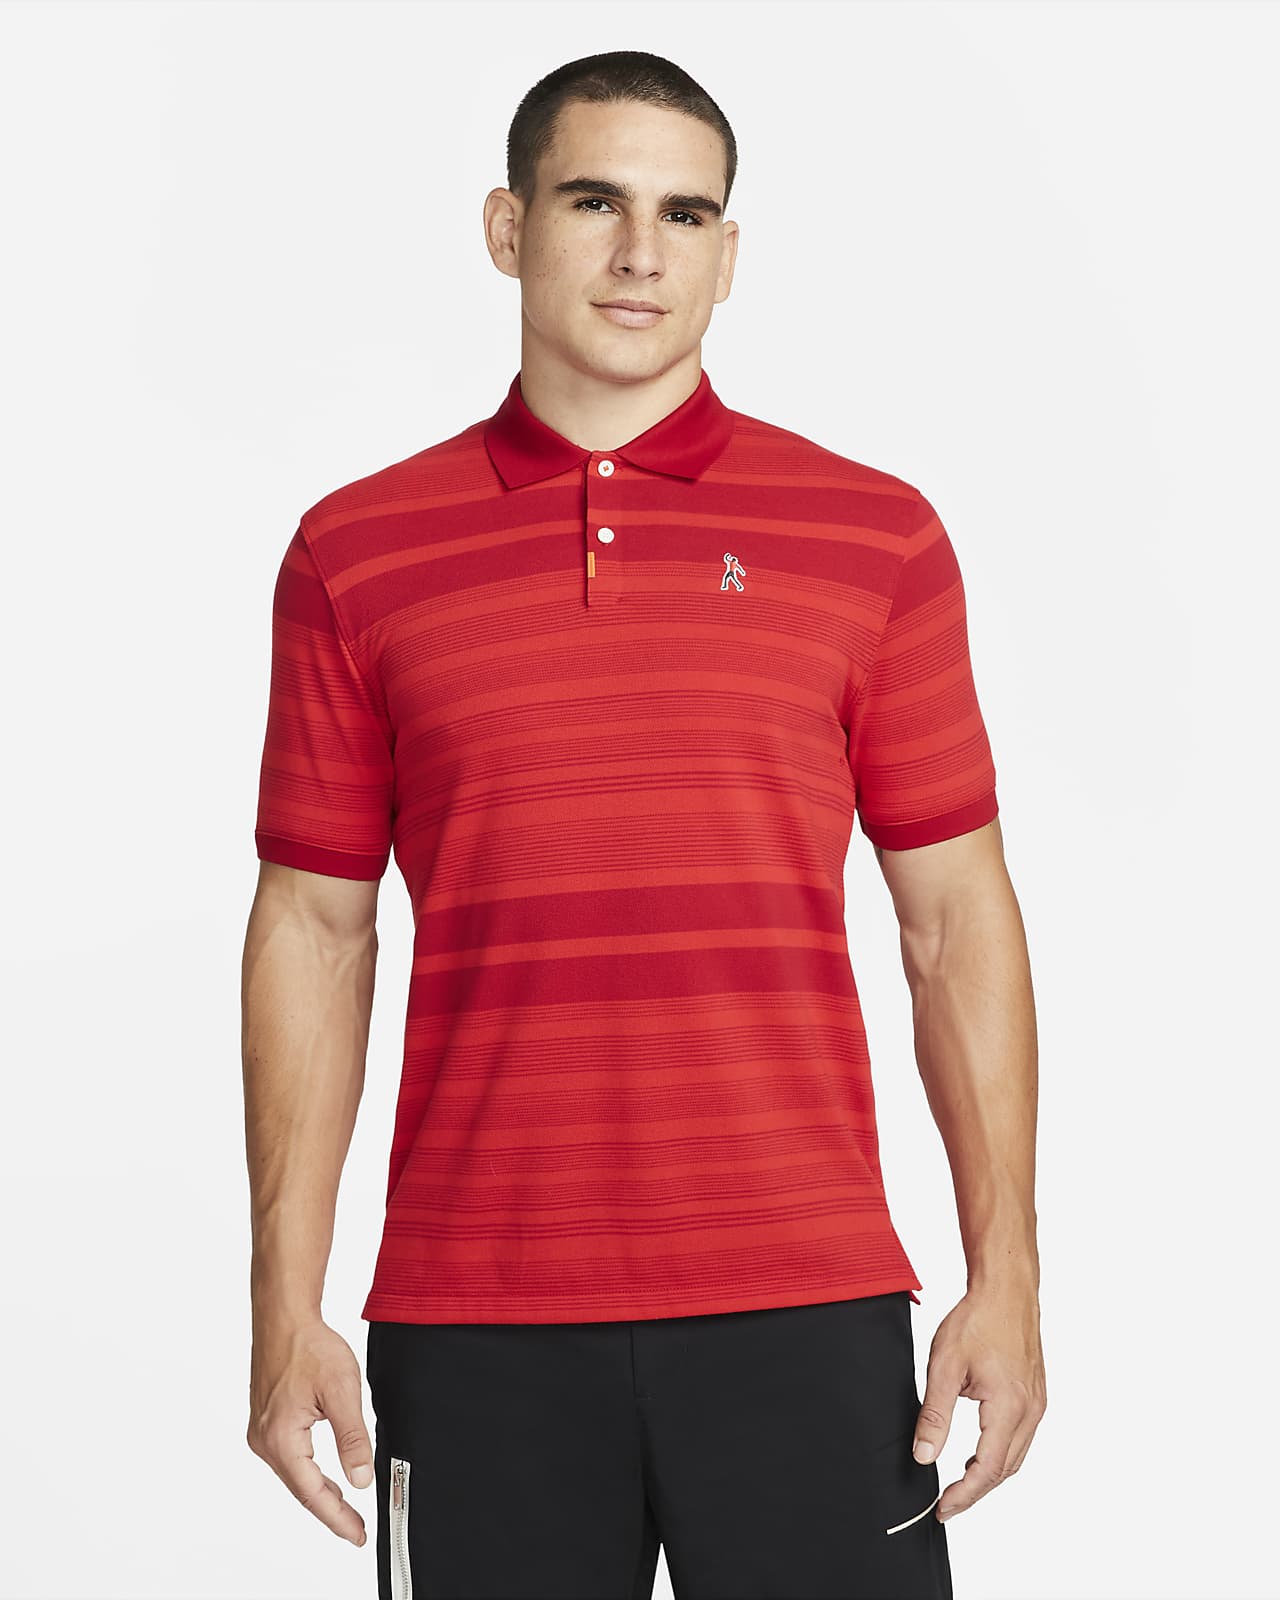 The Nike Polo Tiger Woods Herren-Poloshirt in schmaler Passform